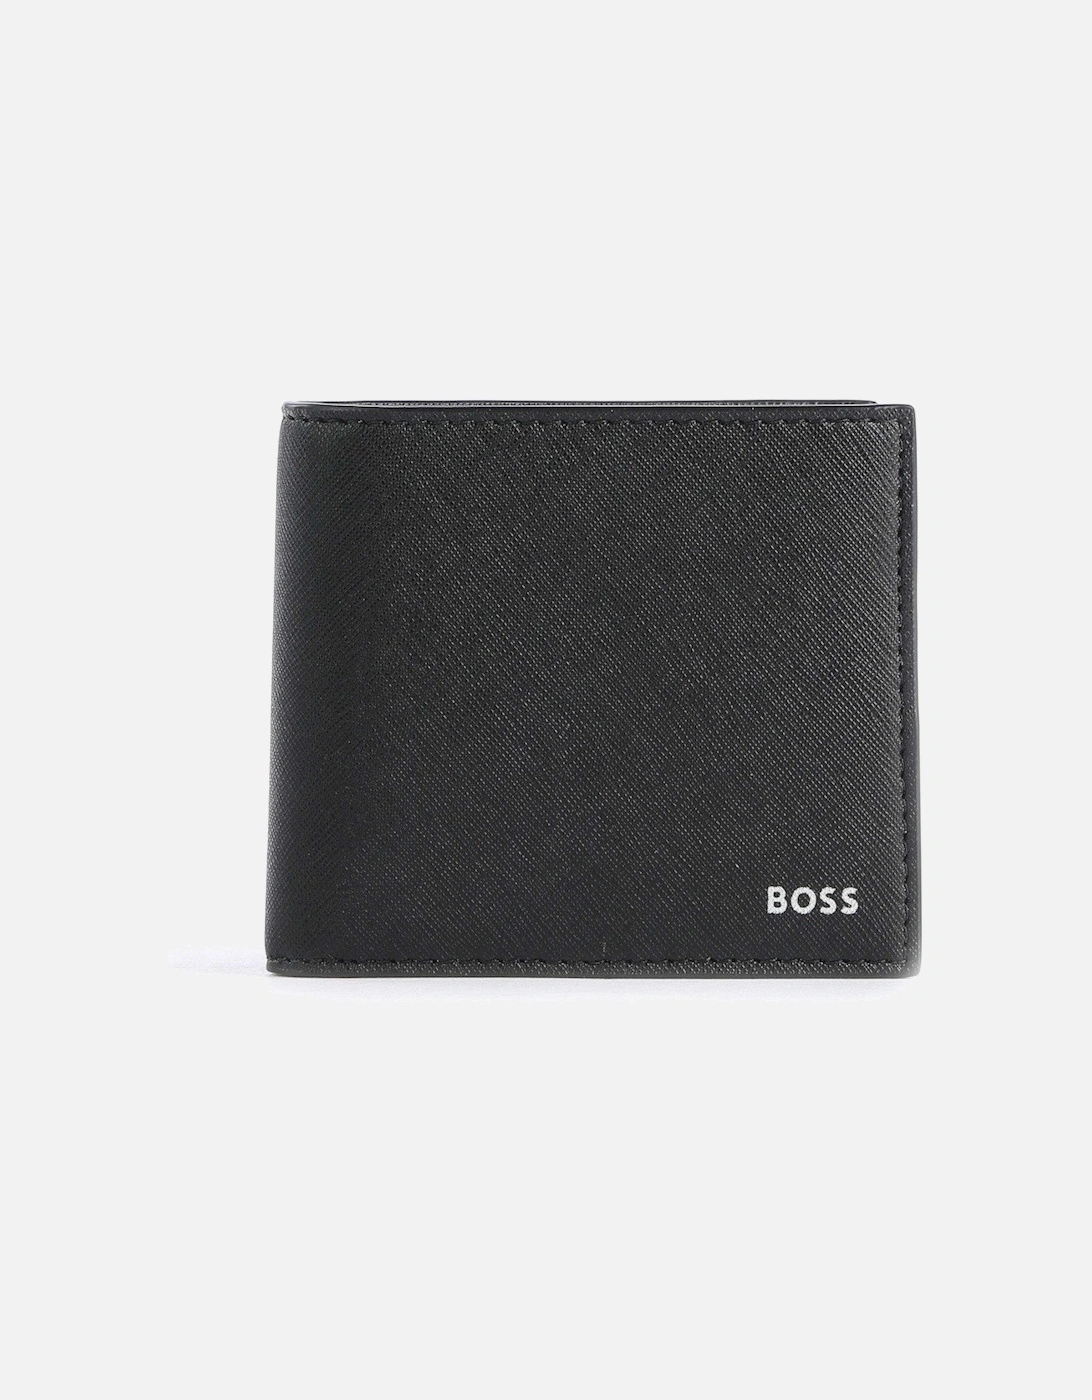 BOSS Shoes & Accessories Zair_8cc Wallet 001 Black, 4 of 3